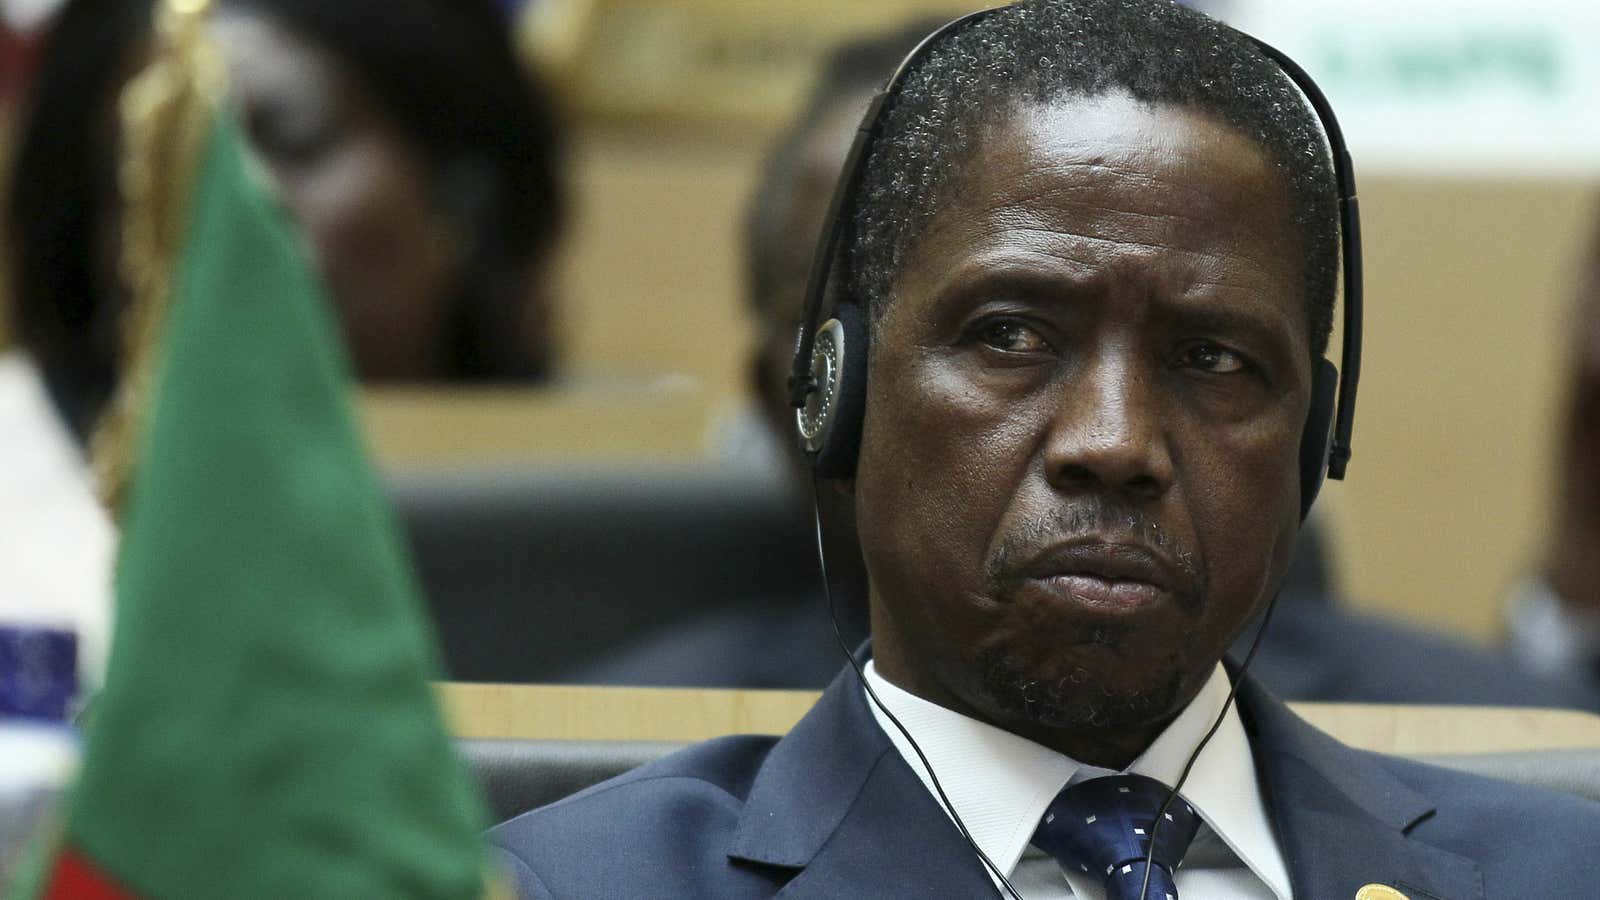 Zambia’s president Lungu in a pensive mood.